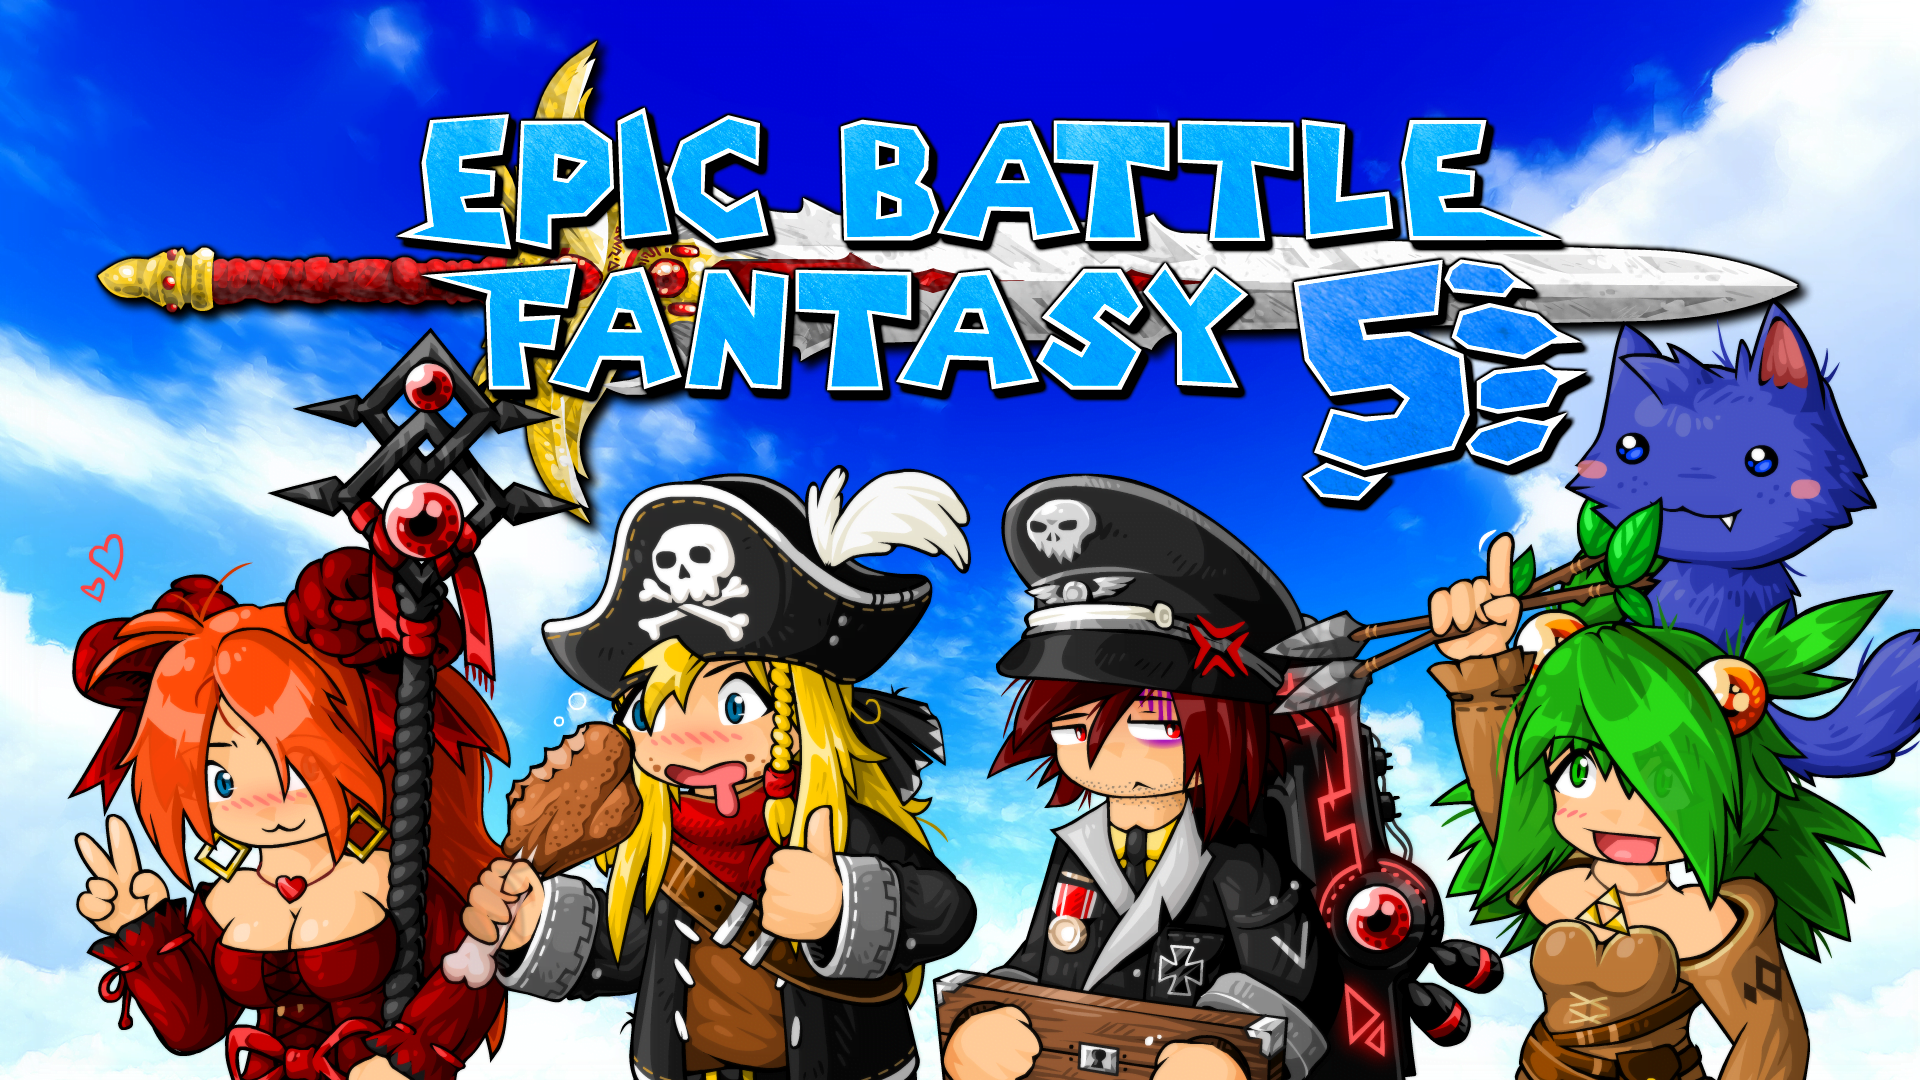 Epic Battle Fantasy 5 PC Version Full Game Free Download Gaming News